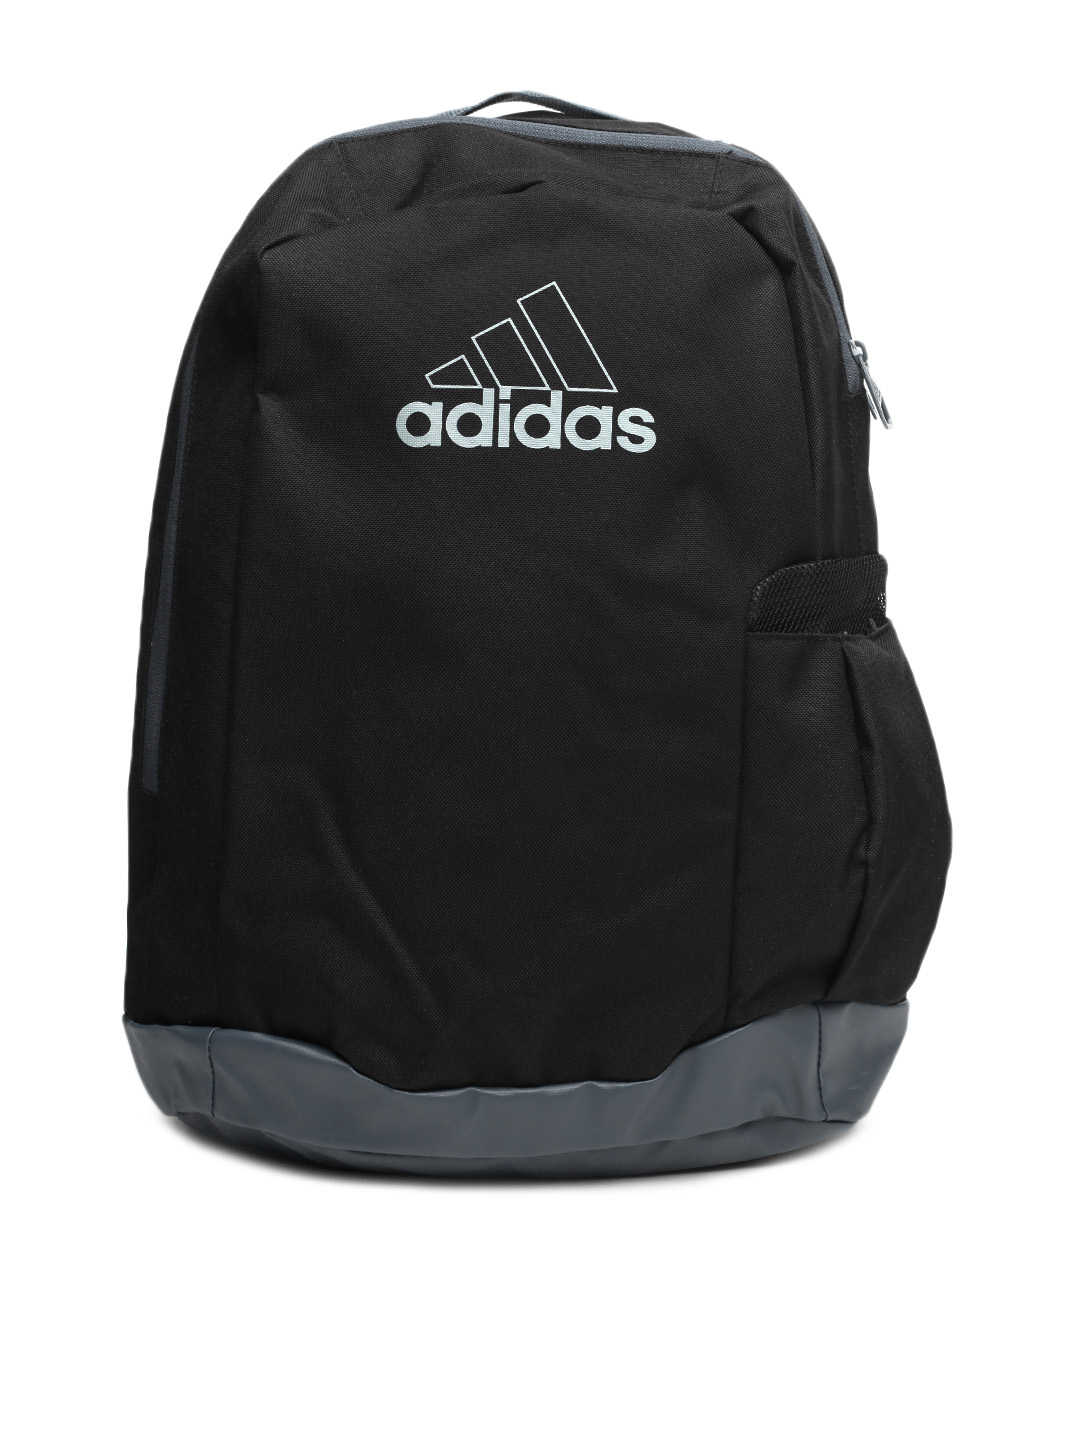 adidas black backpack